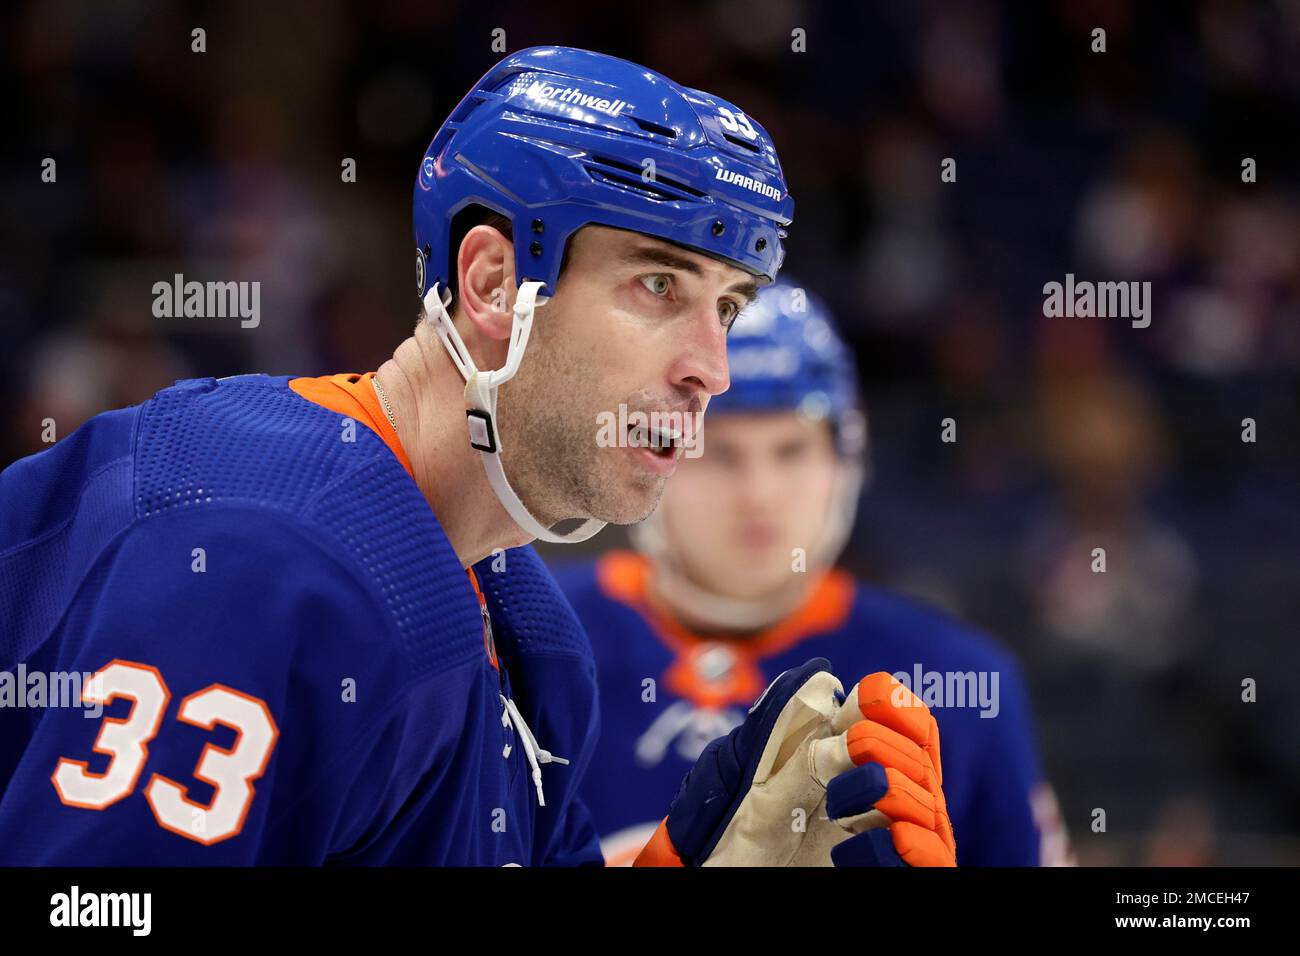 New York Islanders defenseman Zdeno Chara (33) skates against the